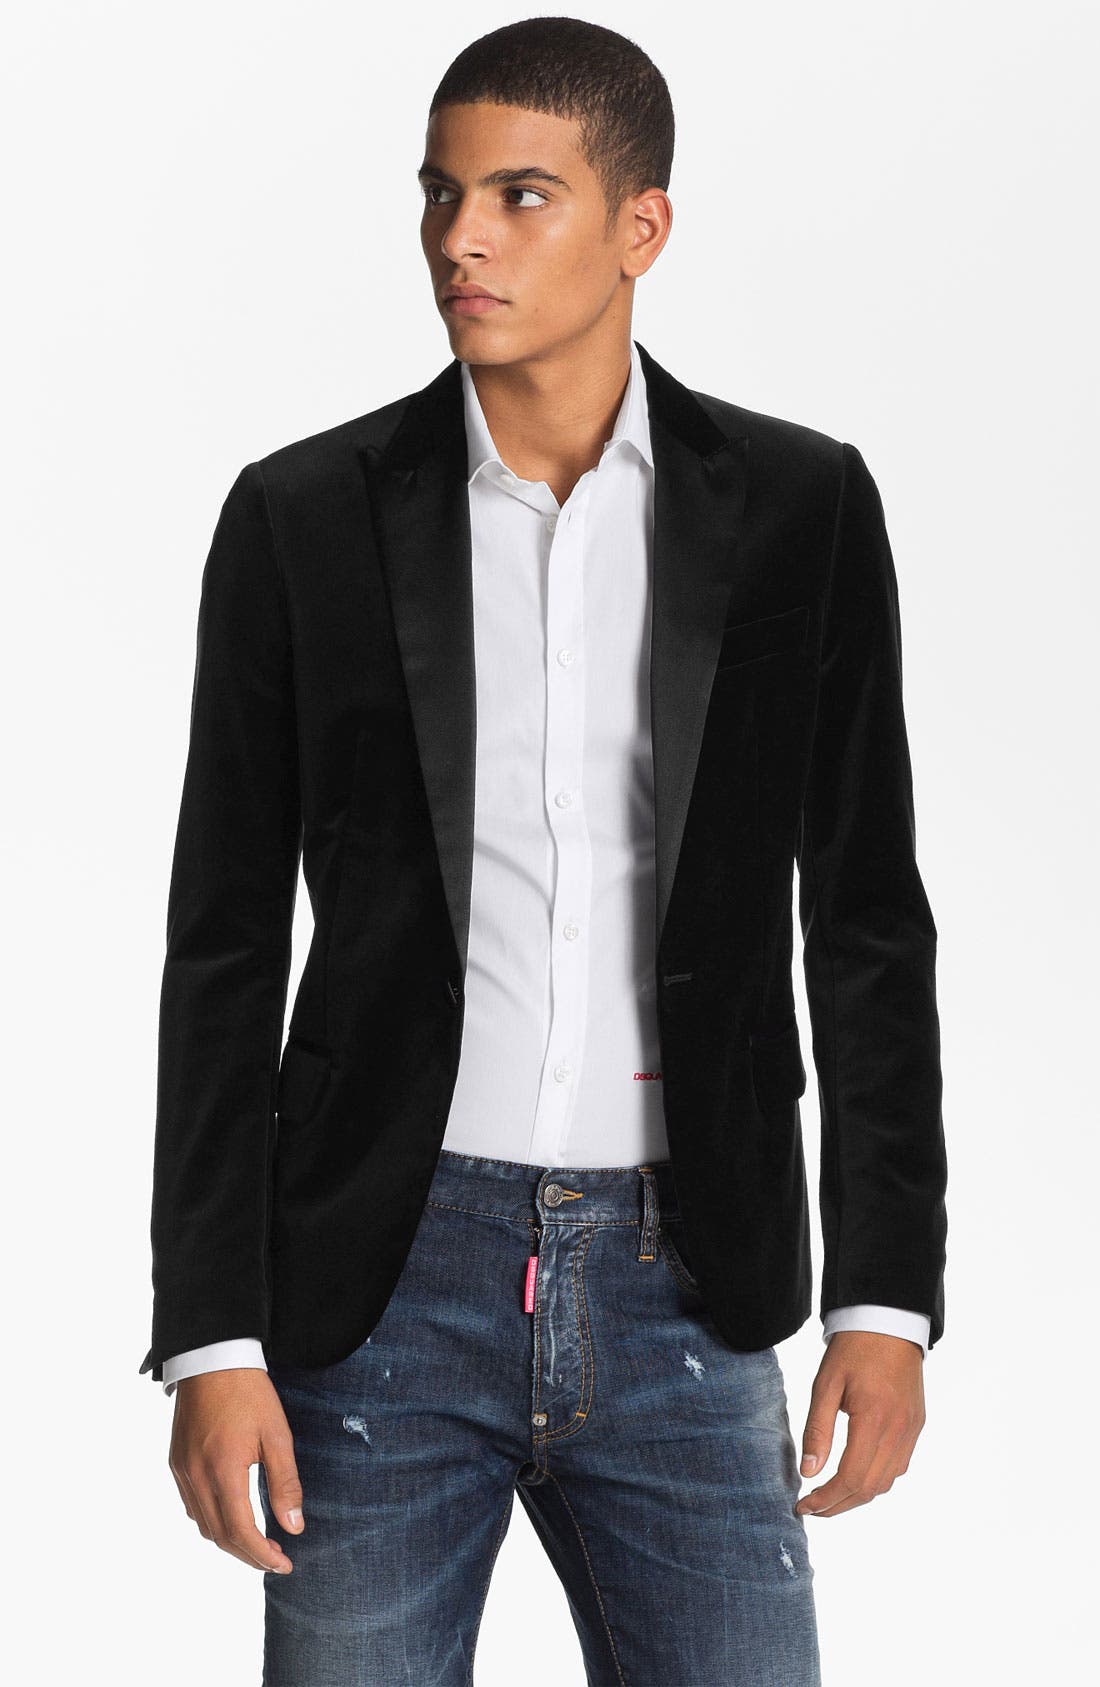 tuxedo jacket with jeans